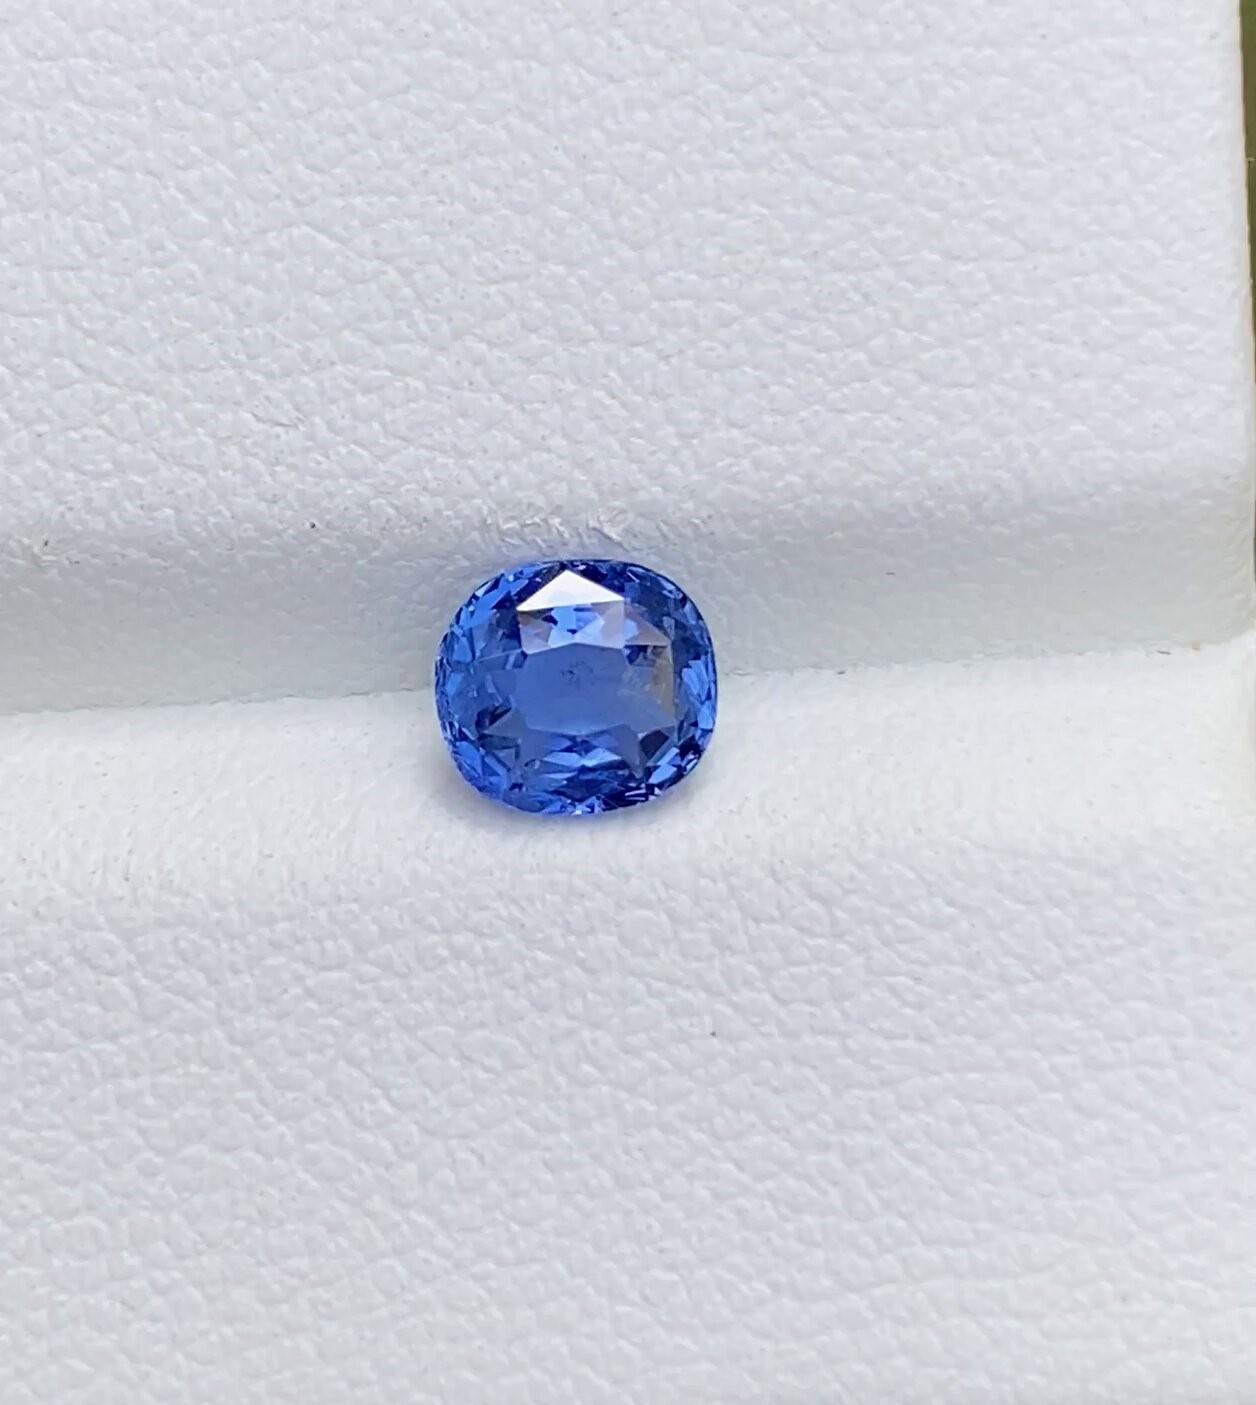 Ceylon Blue sapphire 1.08 Carats unheated Gemstone

• Variety: Sapphire
• Origin: Sri Lanka (Ceylon)
• Color(s): cornflower blue
• Shape/Cutting Style: Oval
• Cut: Wellcut
• Dimensions: 5.35.5mm x 5.92mm x 3.64mm
• Calibrated: No
• Clarity Grade: